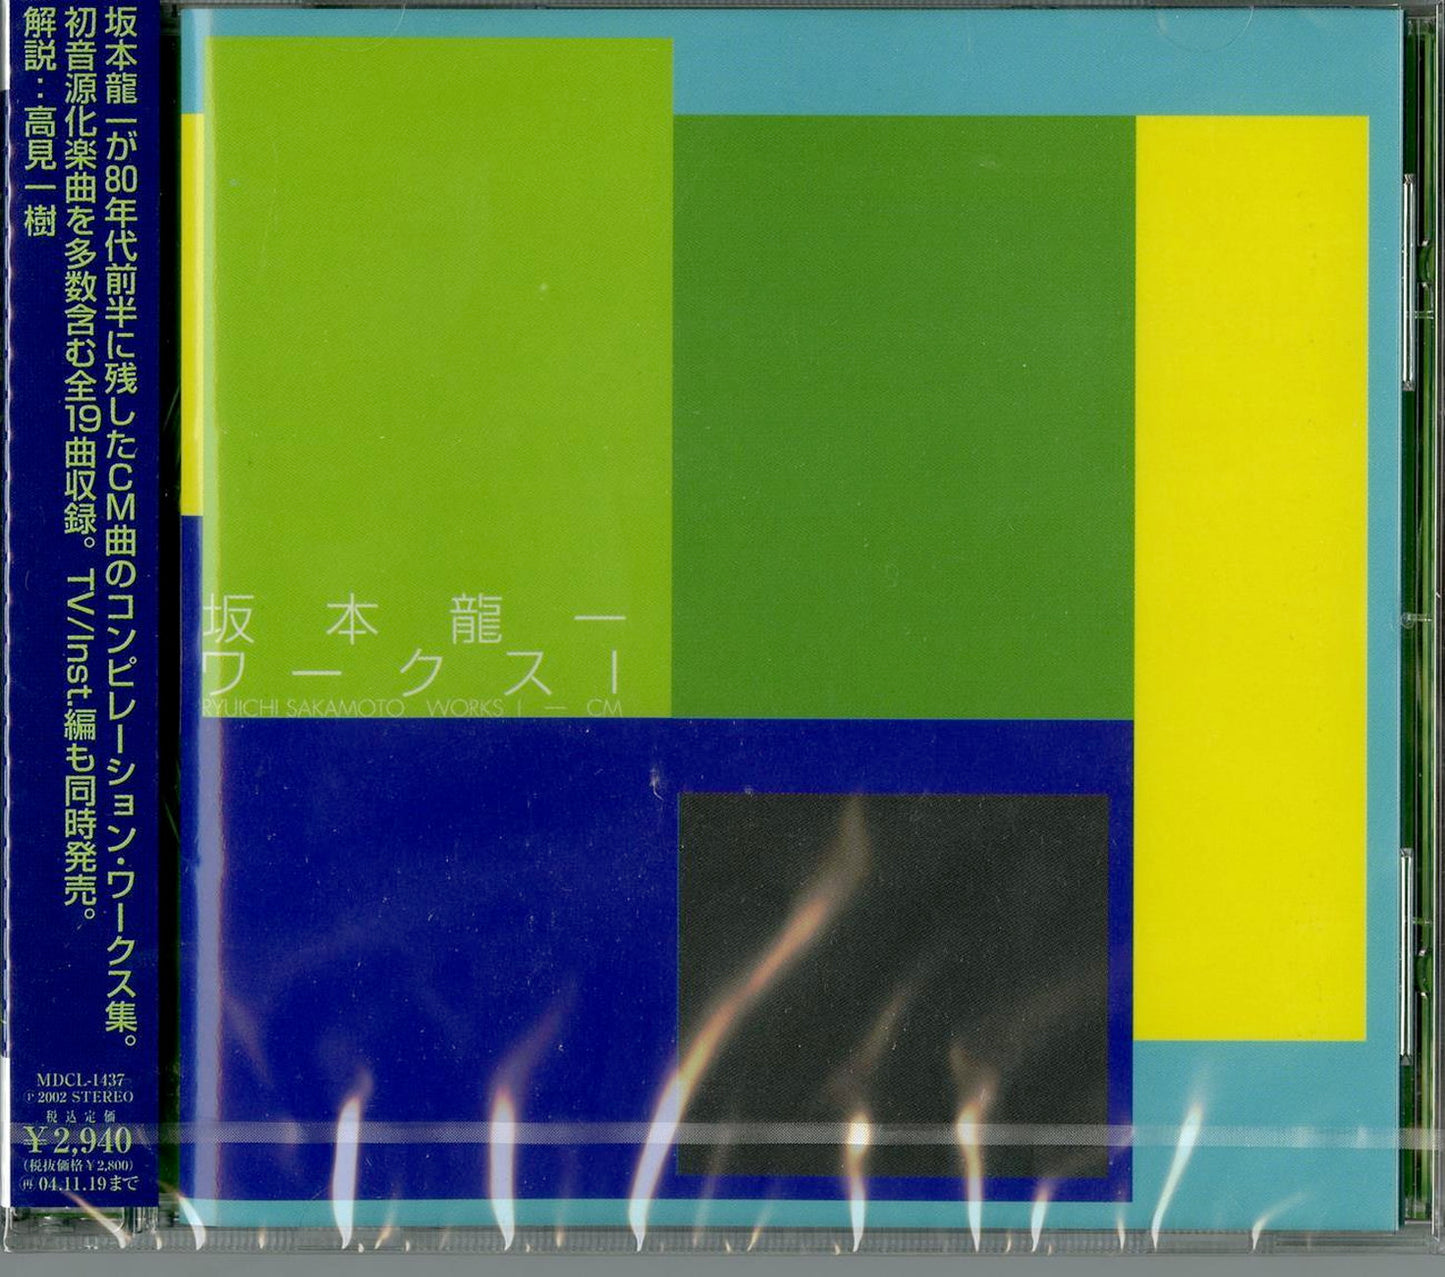 Ryuichi Sakamoto - Works I Cm - Japan  CD